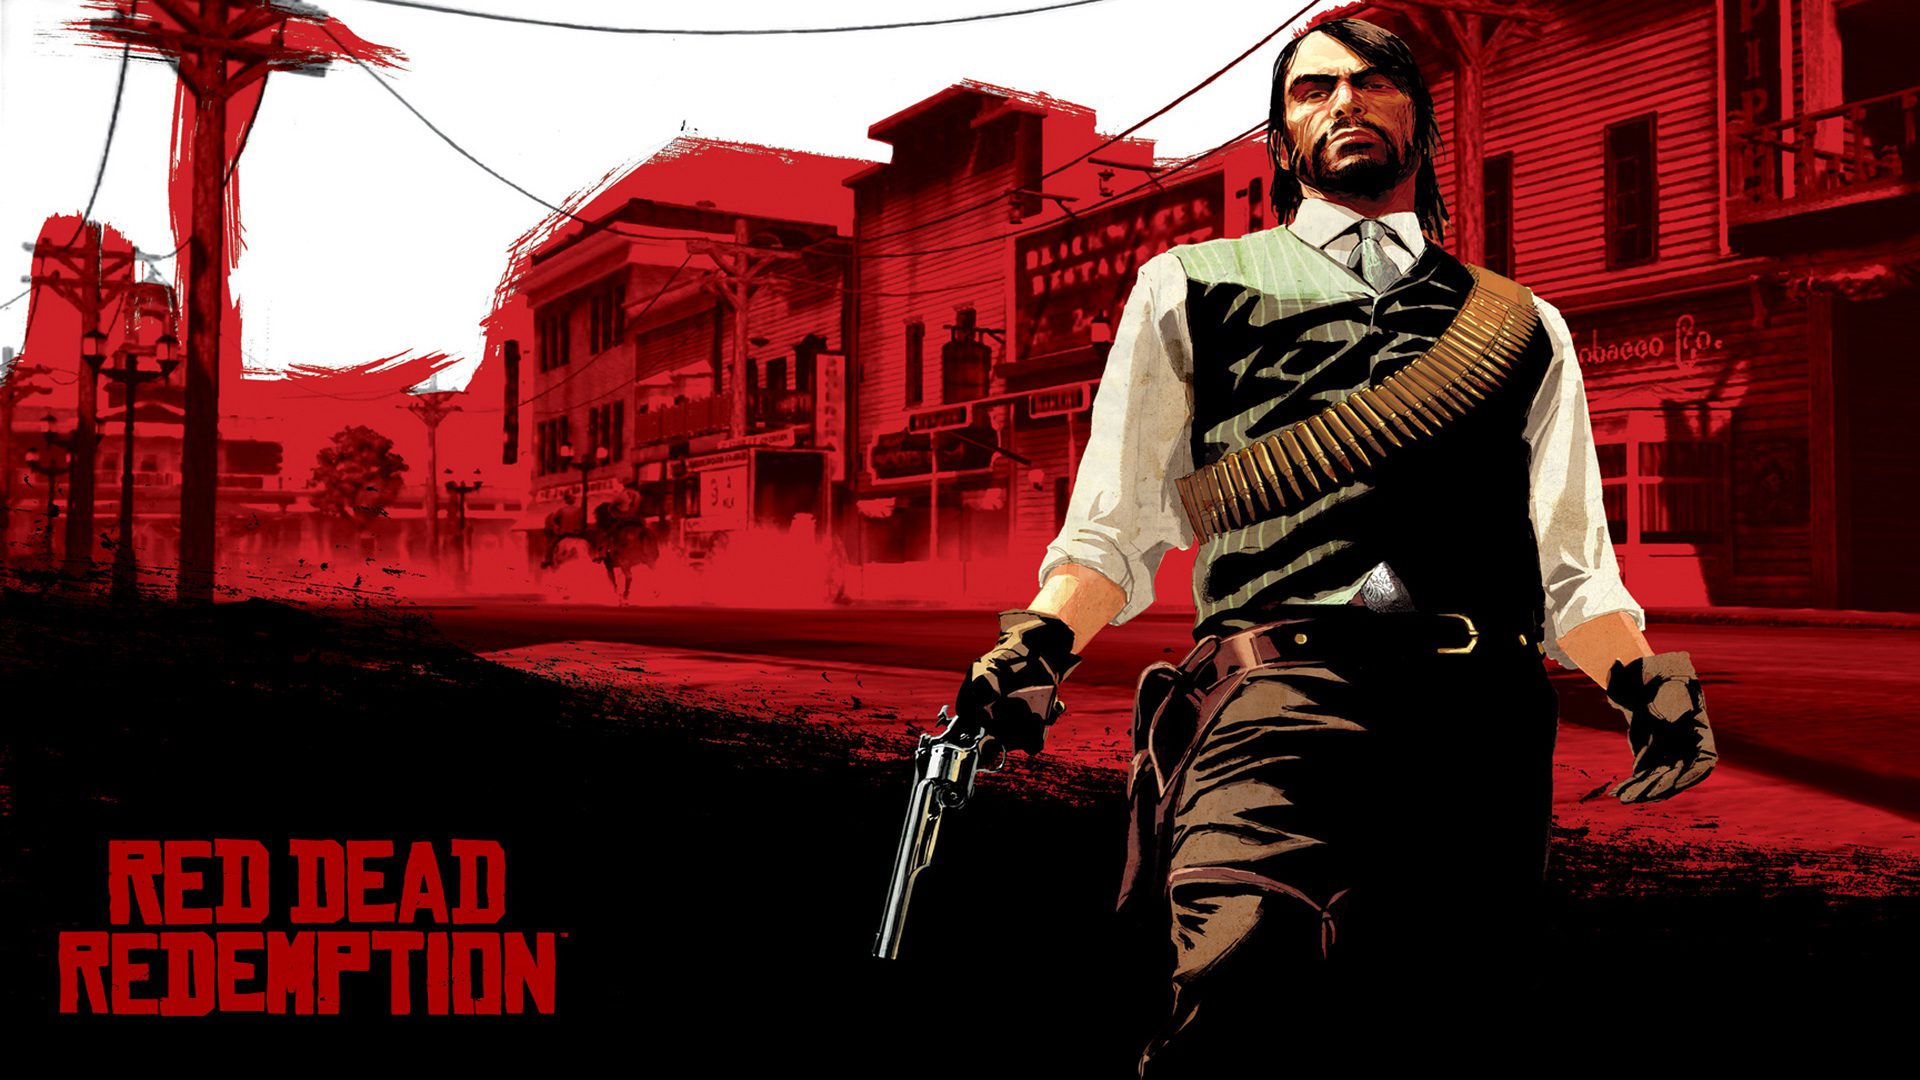 Remaster de Red Dead Redemption está a caminho [rumor]